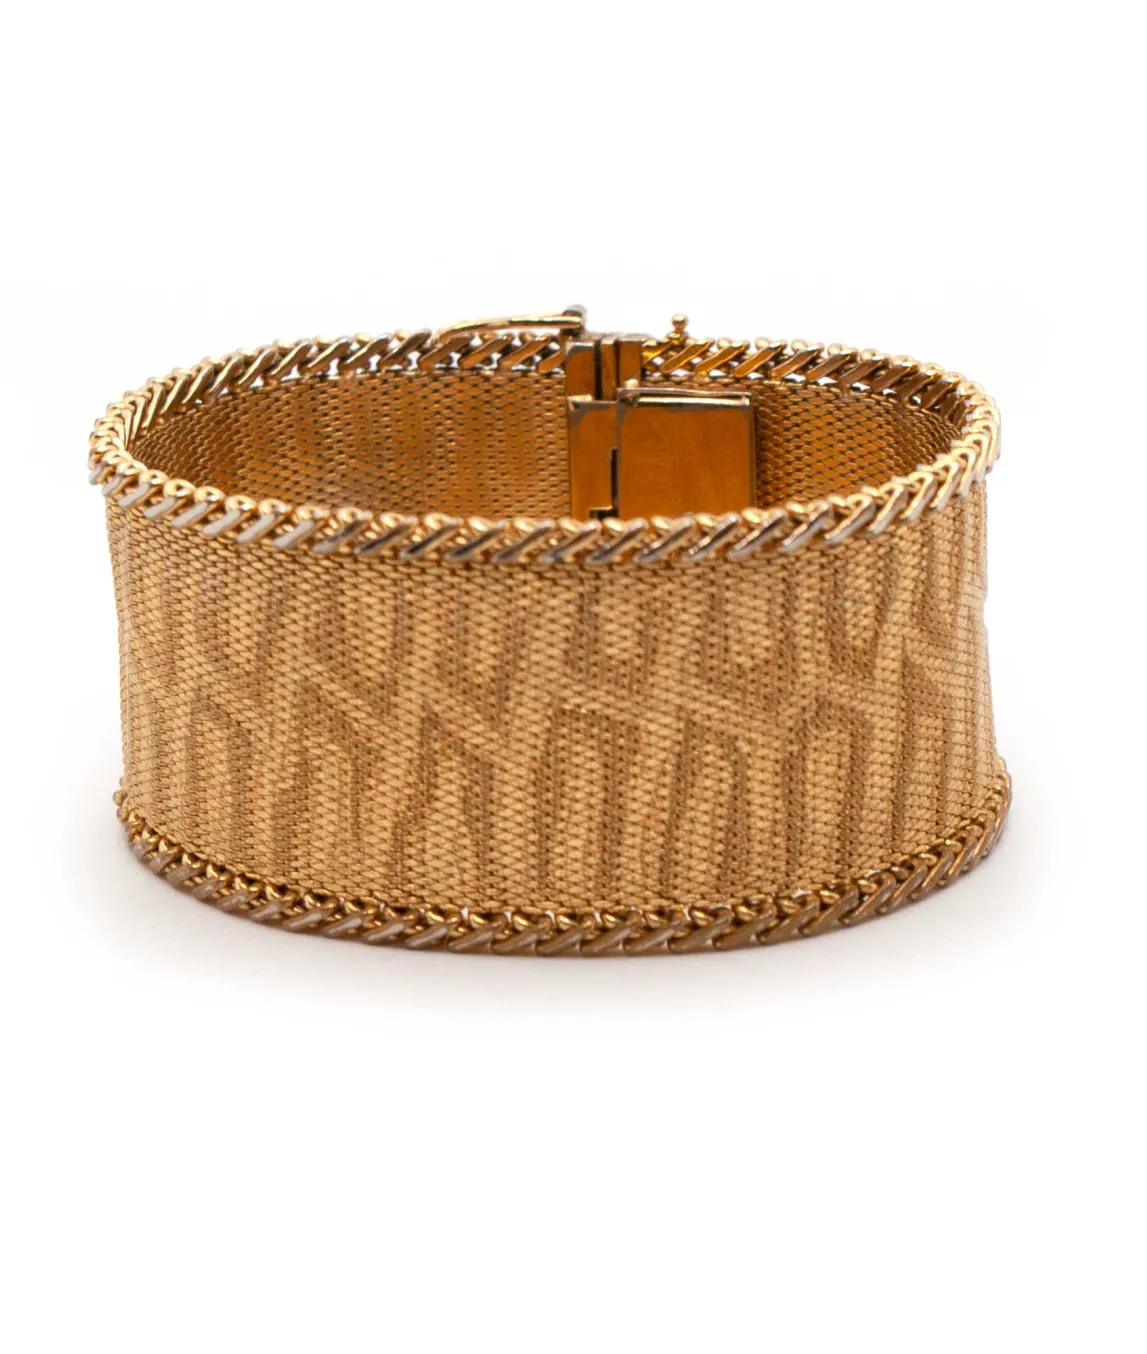 Vintage gold tone woven animal print metal bracelet done up side view